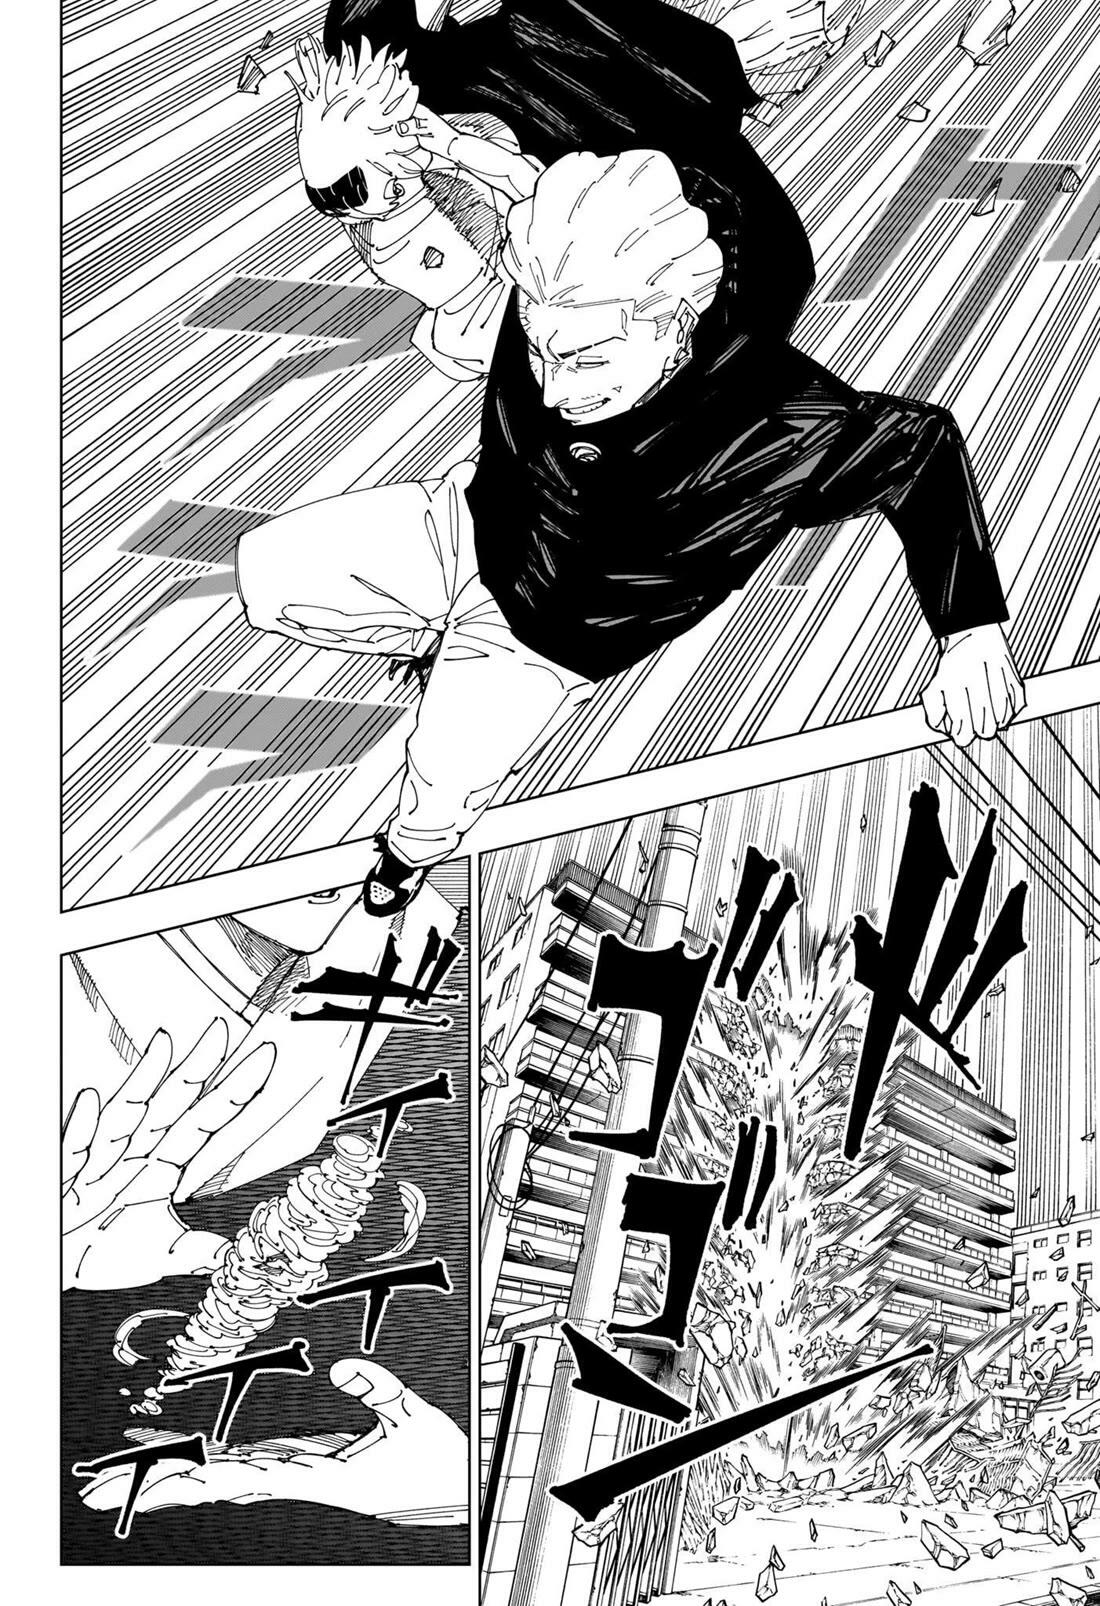 Jujutsu Kaisen Chapter 245: Chapter 245: The Decisive Battle In The Uninhabited, Demon-Infested Shinjuku ⑰ page 5 - Mangakakalot